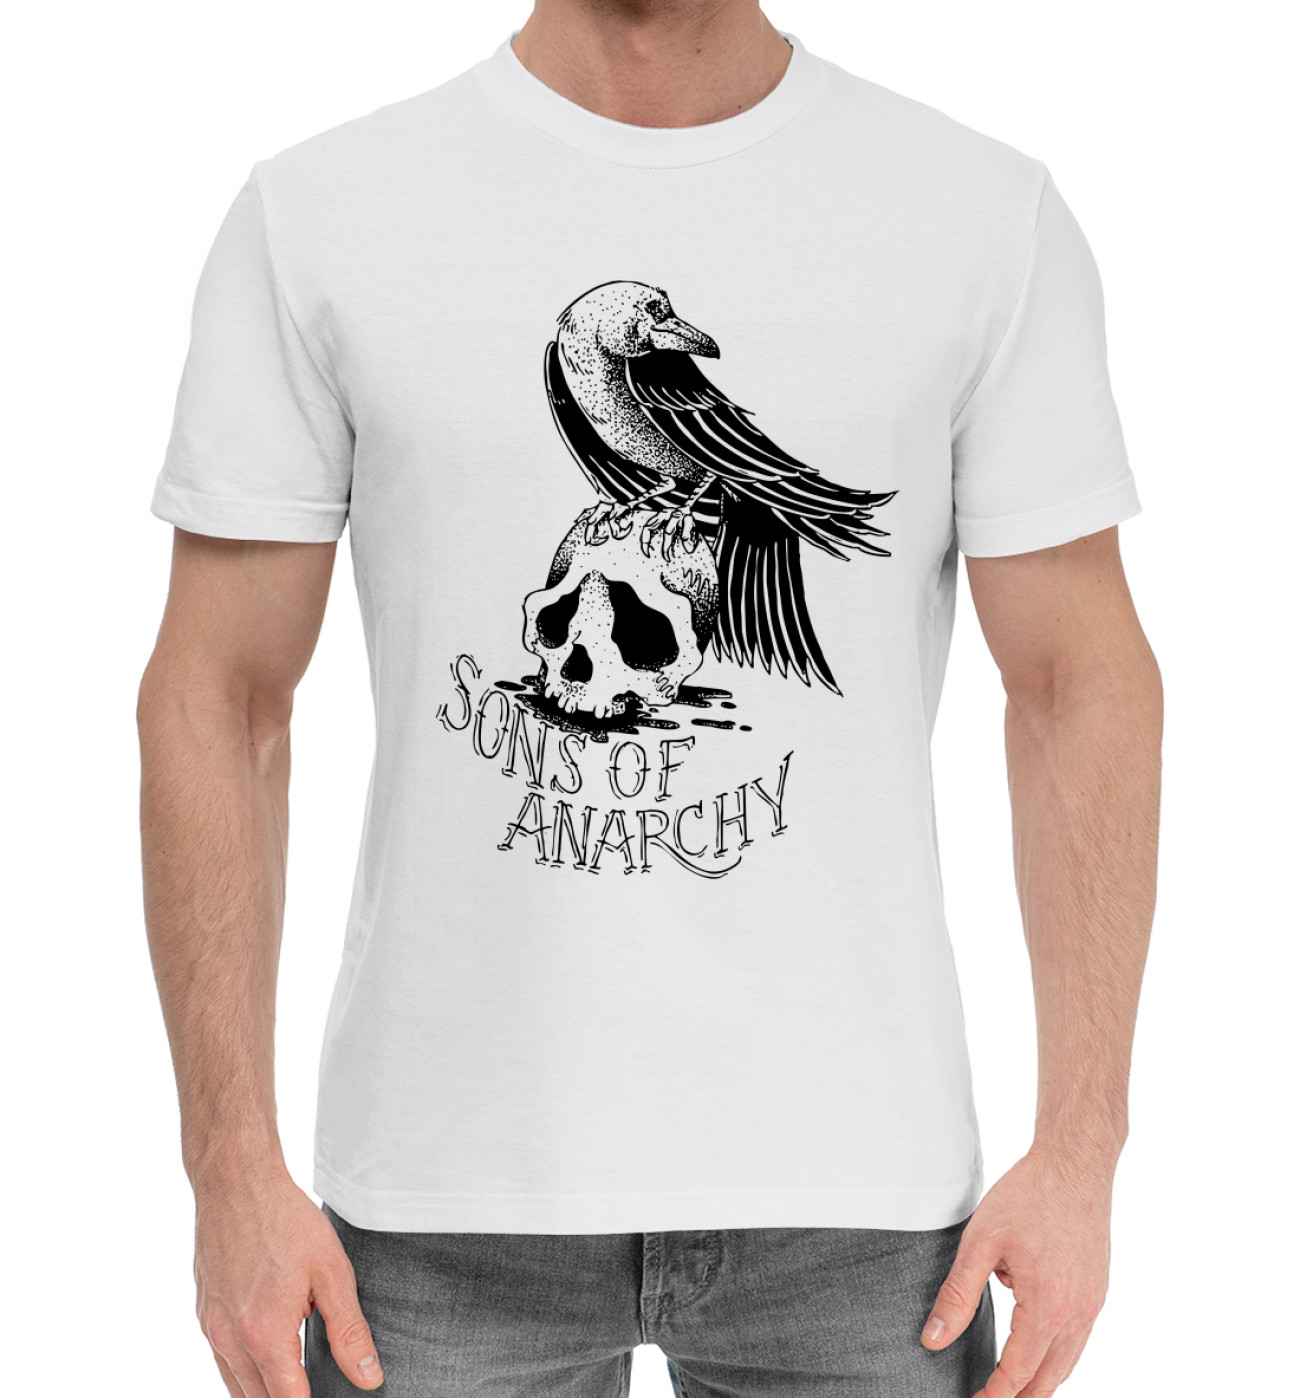 Мужская Хлопковая футболка Sons of Anarchy, артикул: SOA-856662-hfu-2